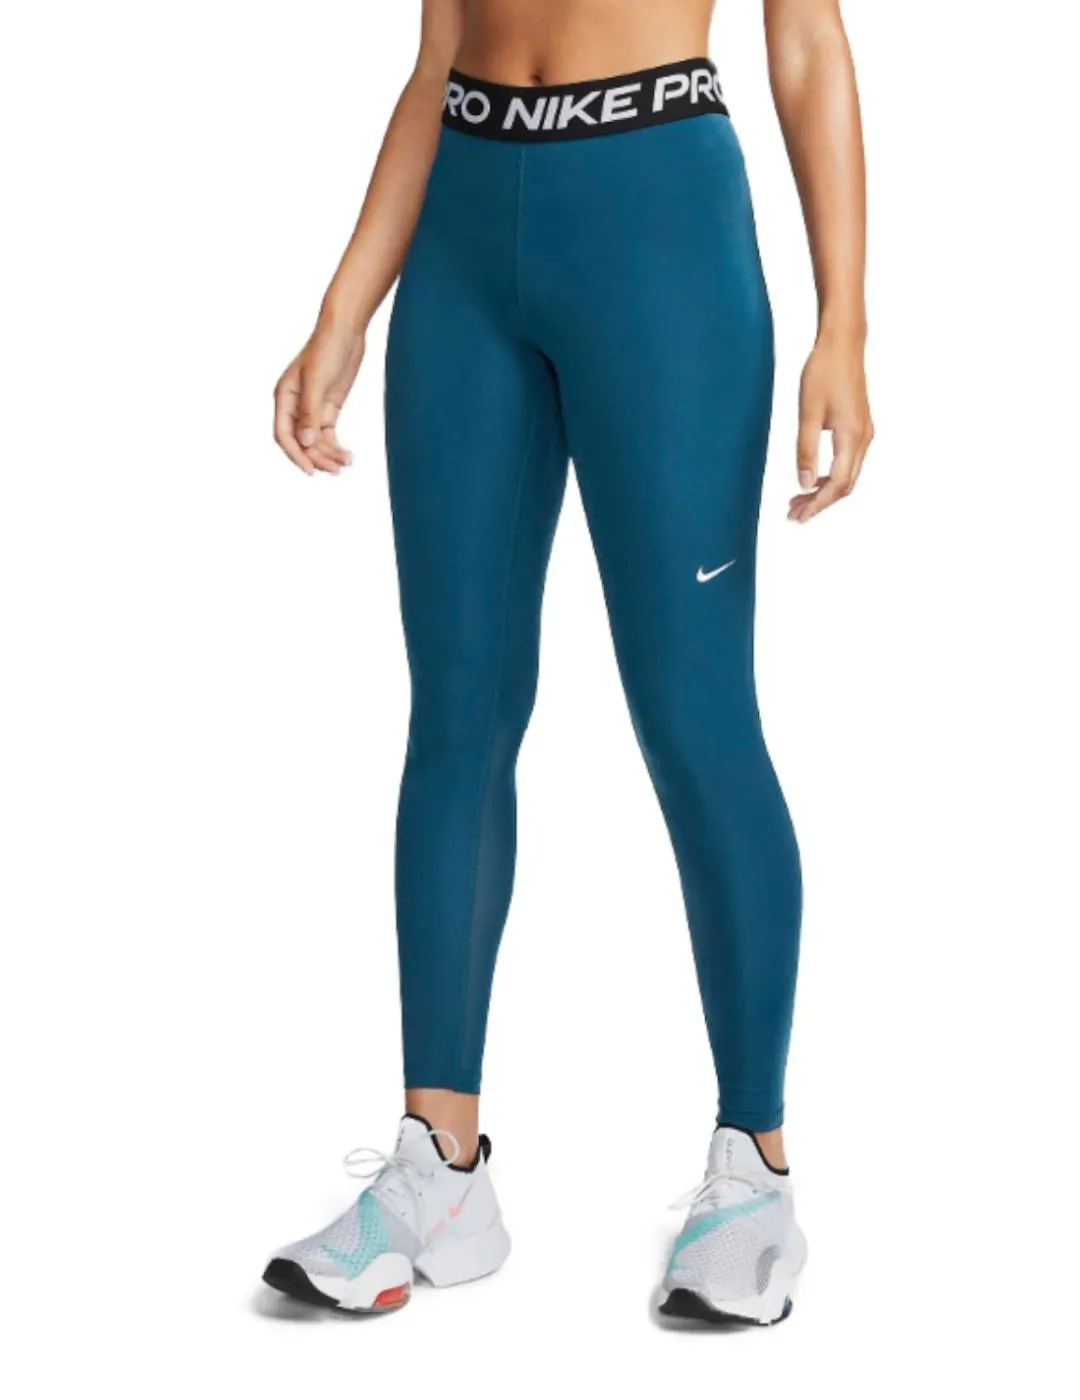 Nike Pro 365 Mujer Azul | Miravia